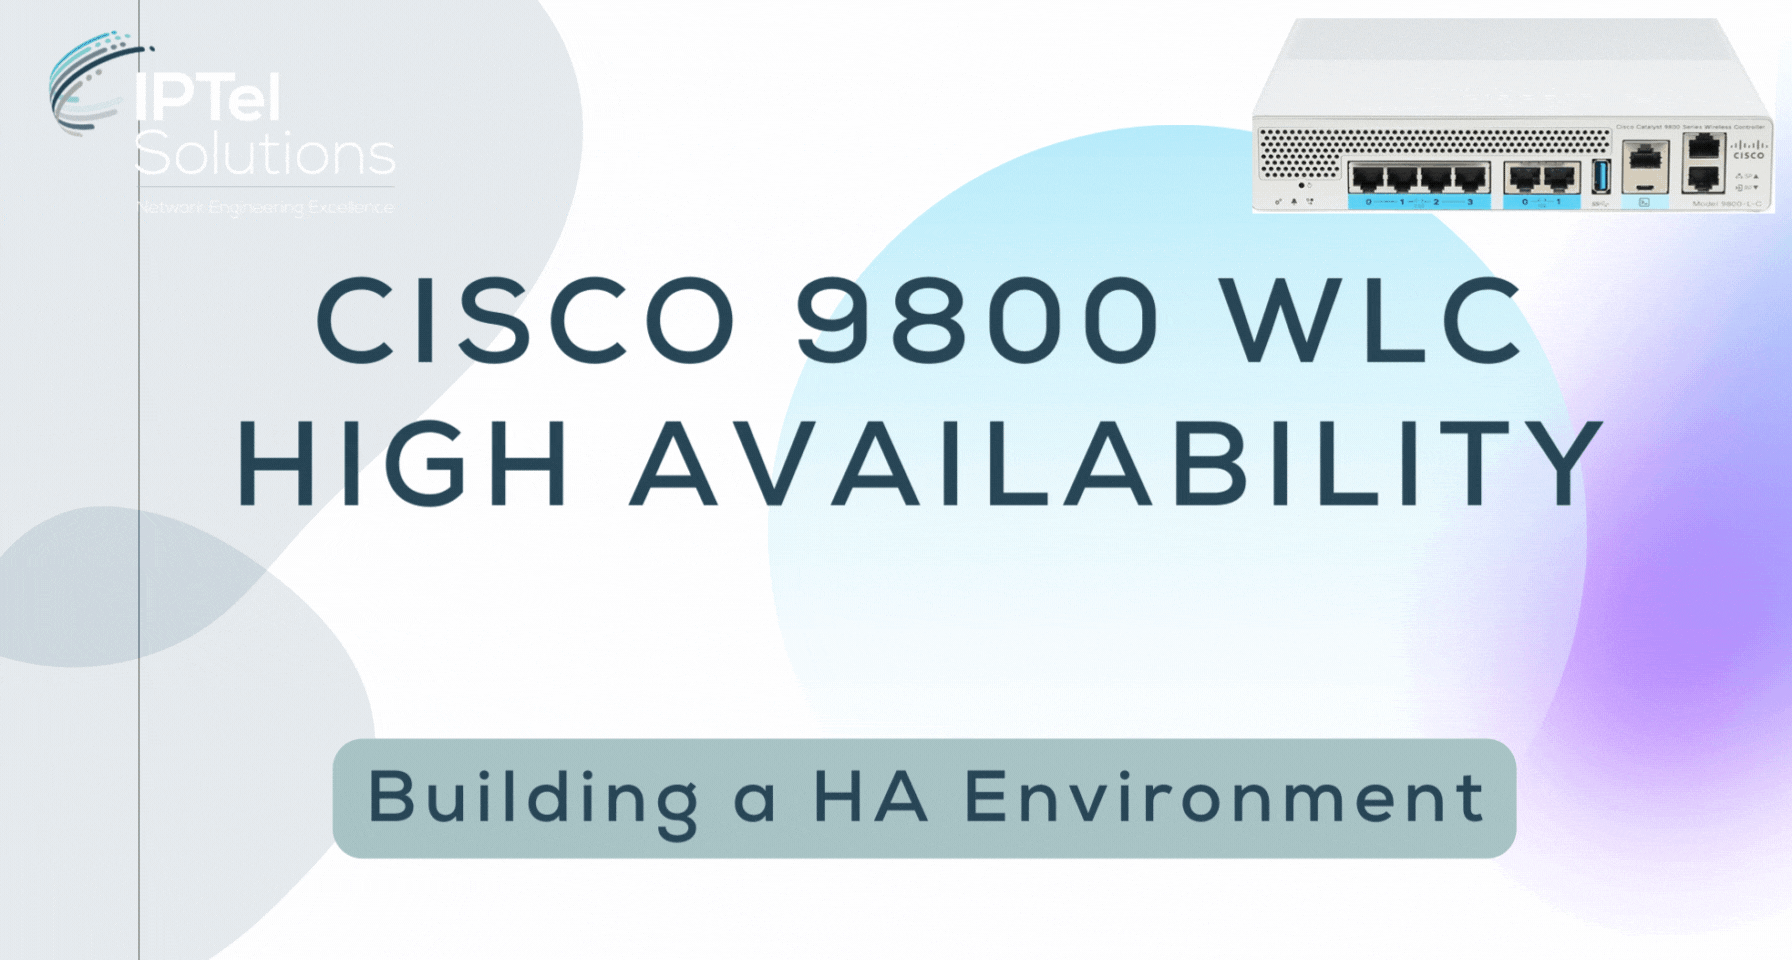 Cisco 9800 WLC High Availability